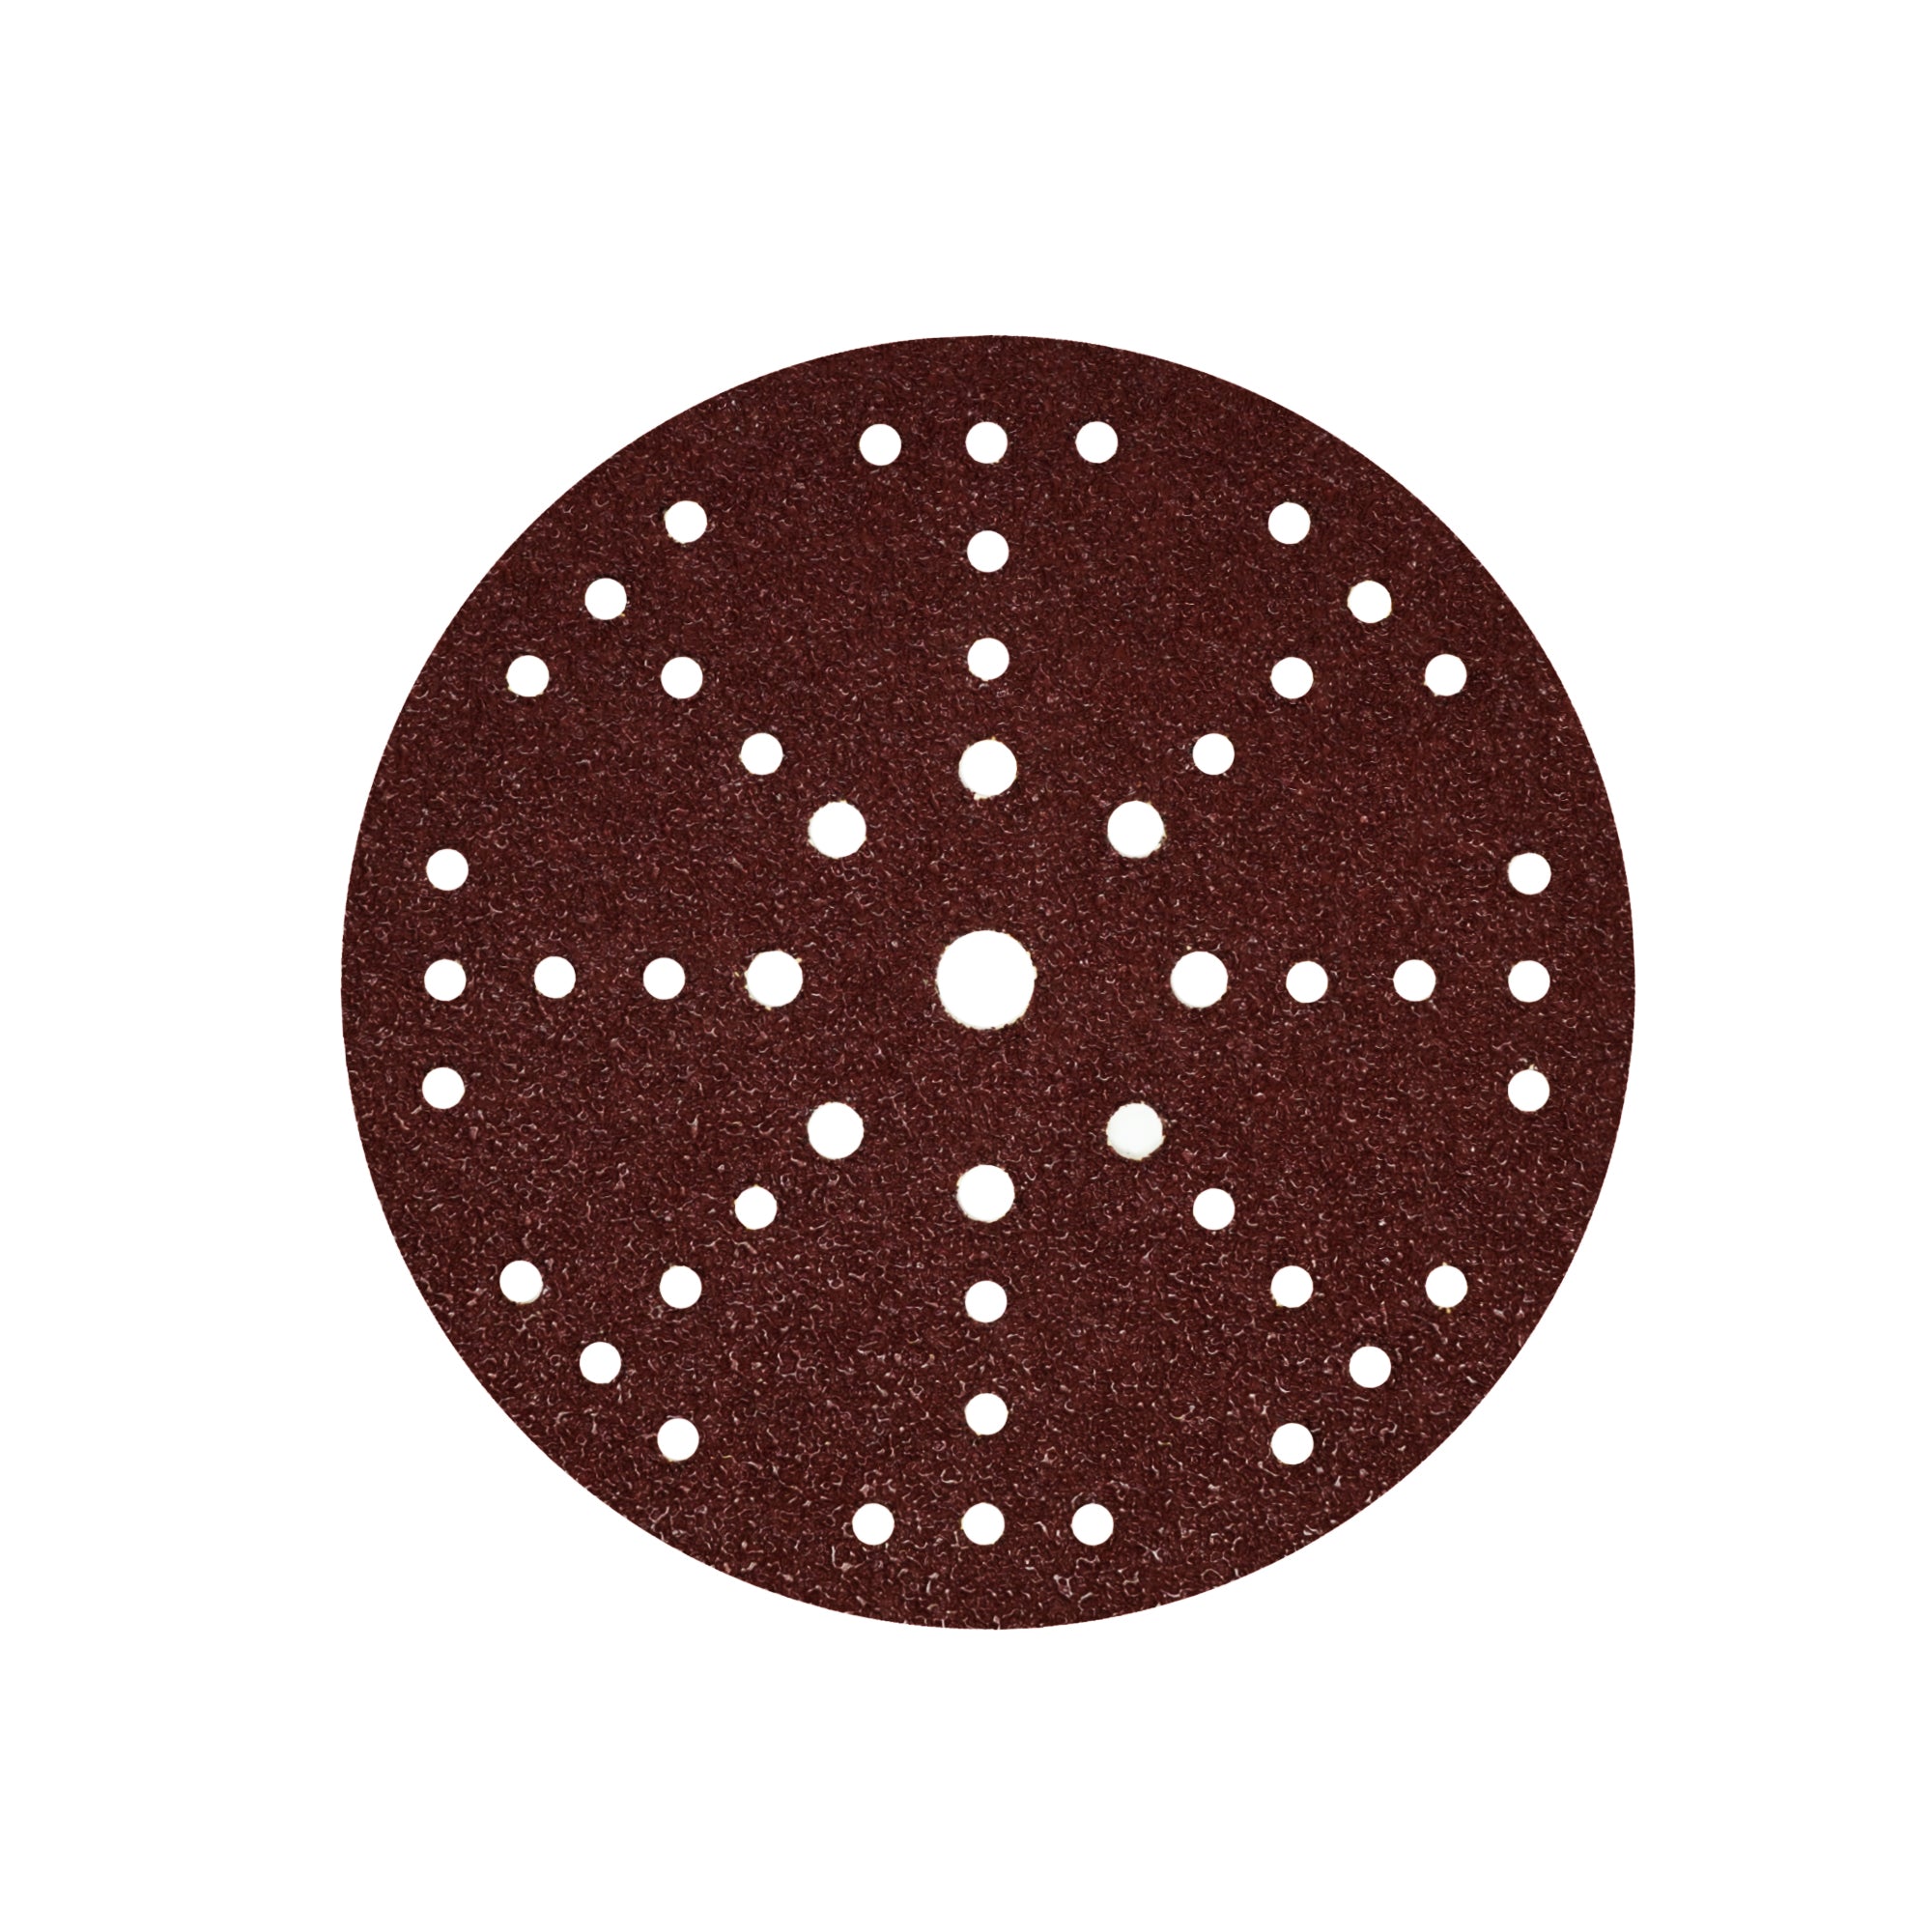 CSR 9" Round Saphir Red Procut Drywall Sanding Discs for Festool (5 Pack)